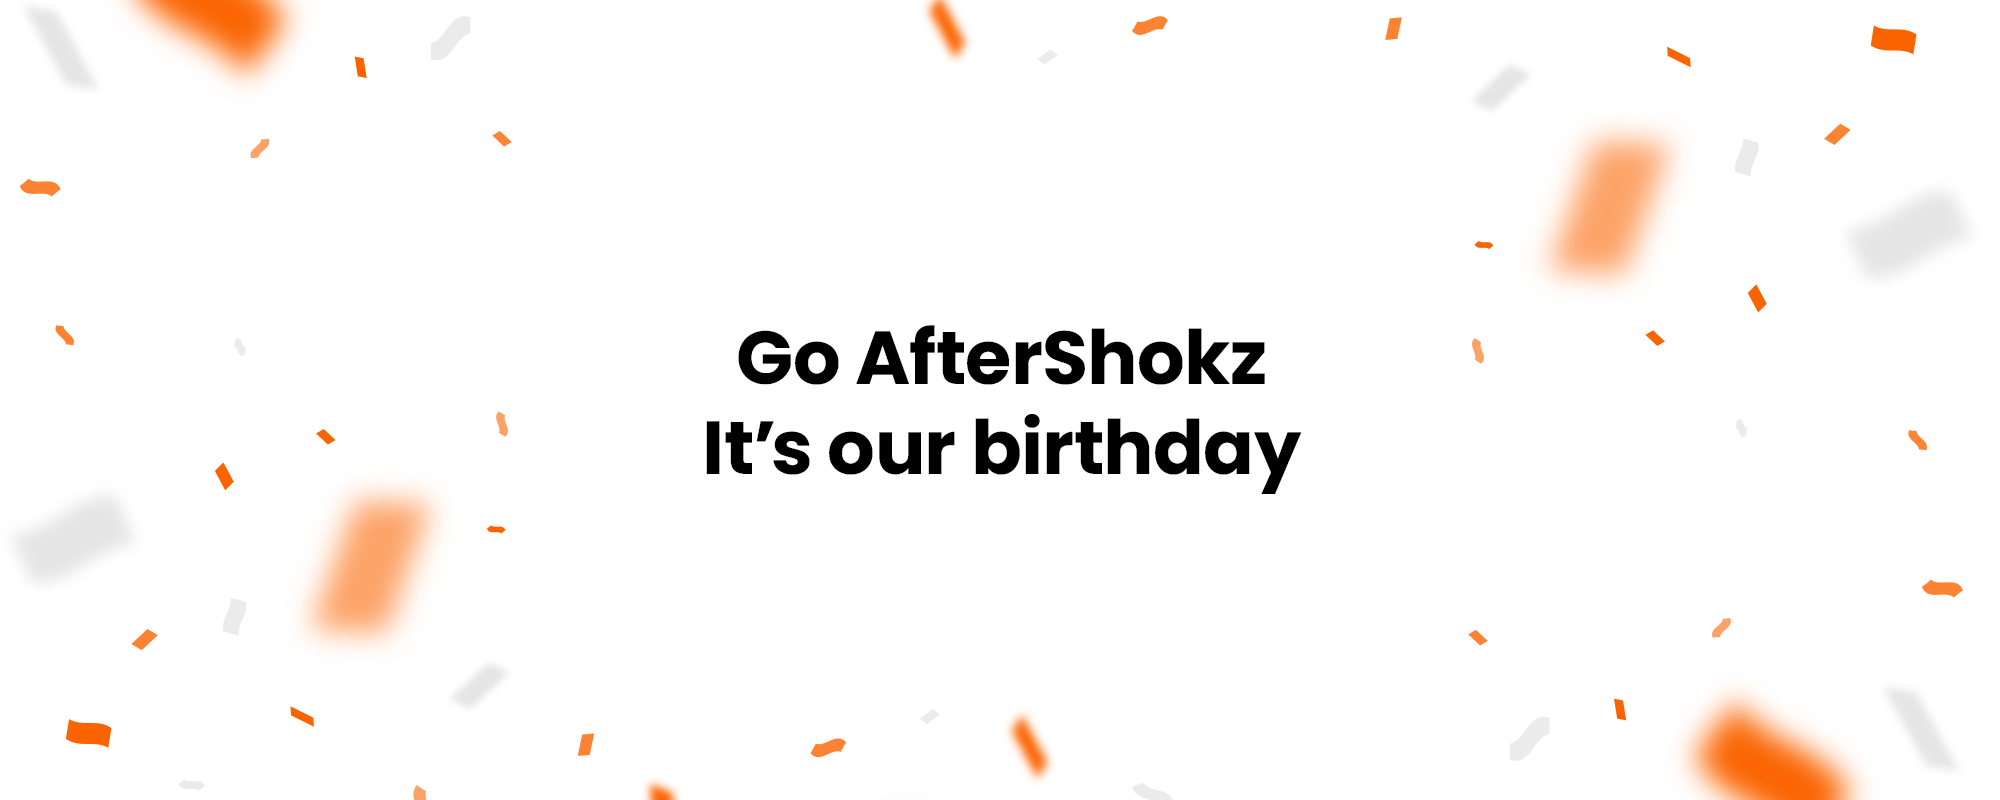 AfterShokz celebrates its 10th anniversary